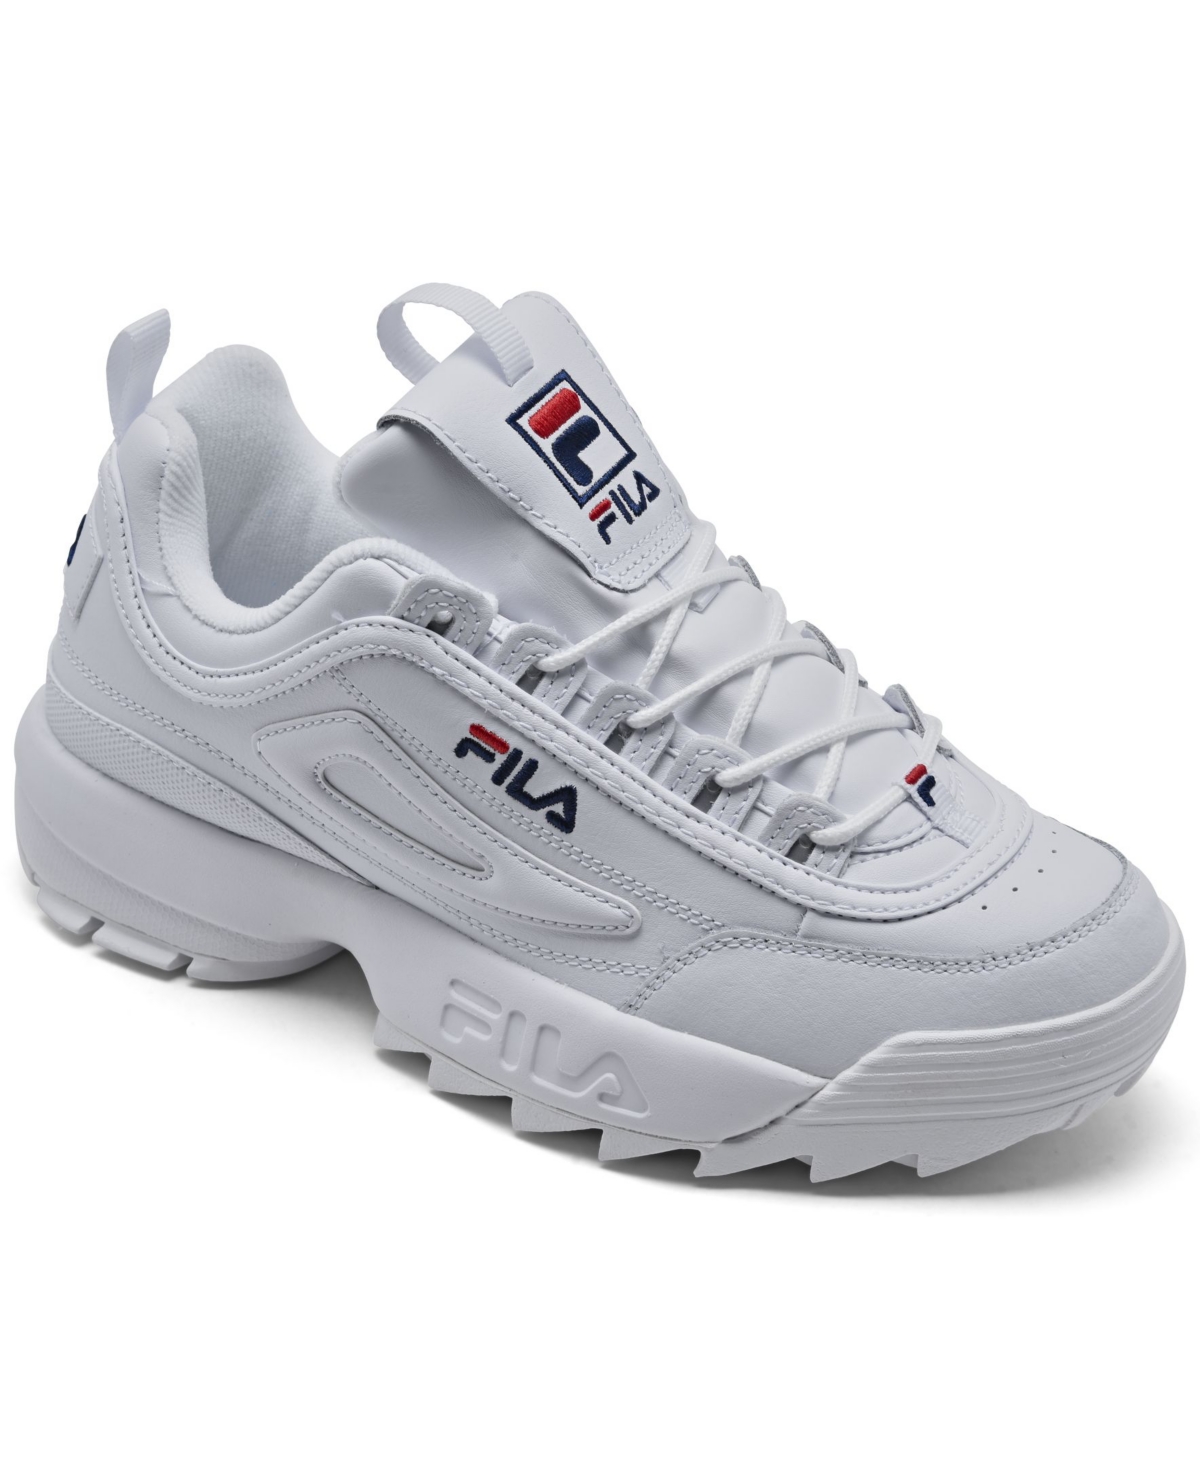 Fila Women's Disruptor II Premium Athletic Sneakers from Finish Line - Macy's